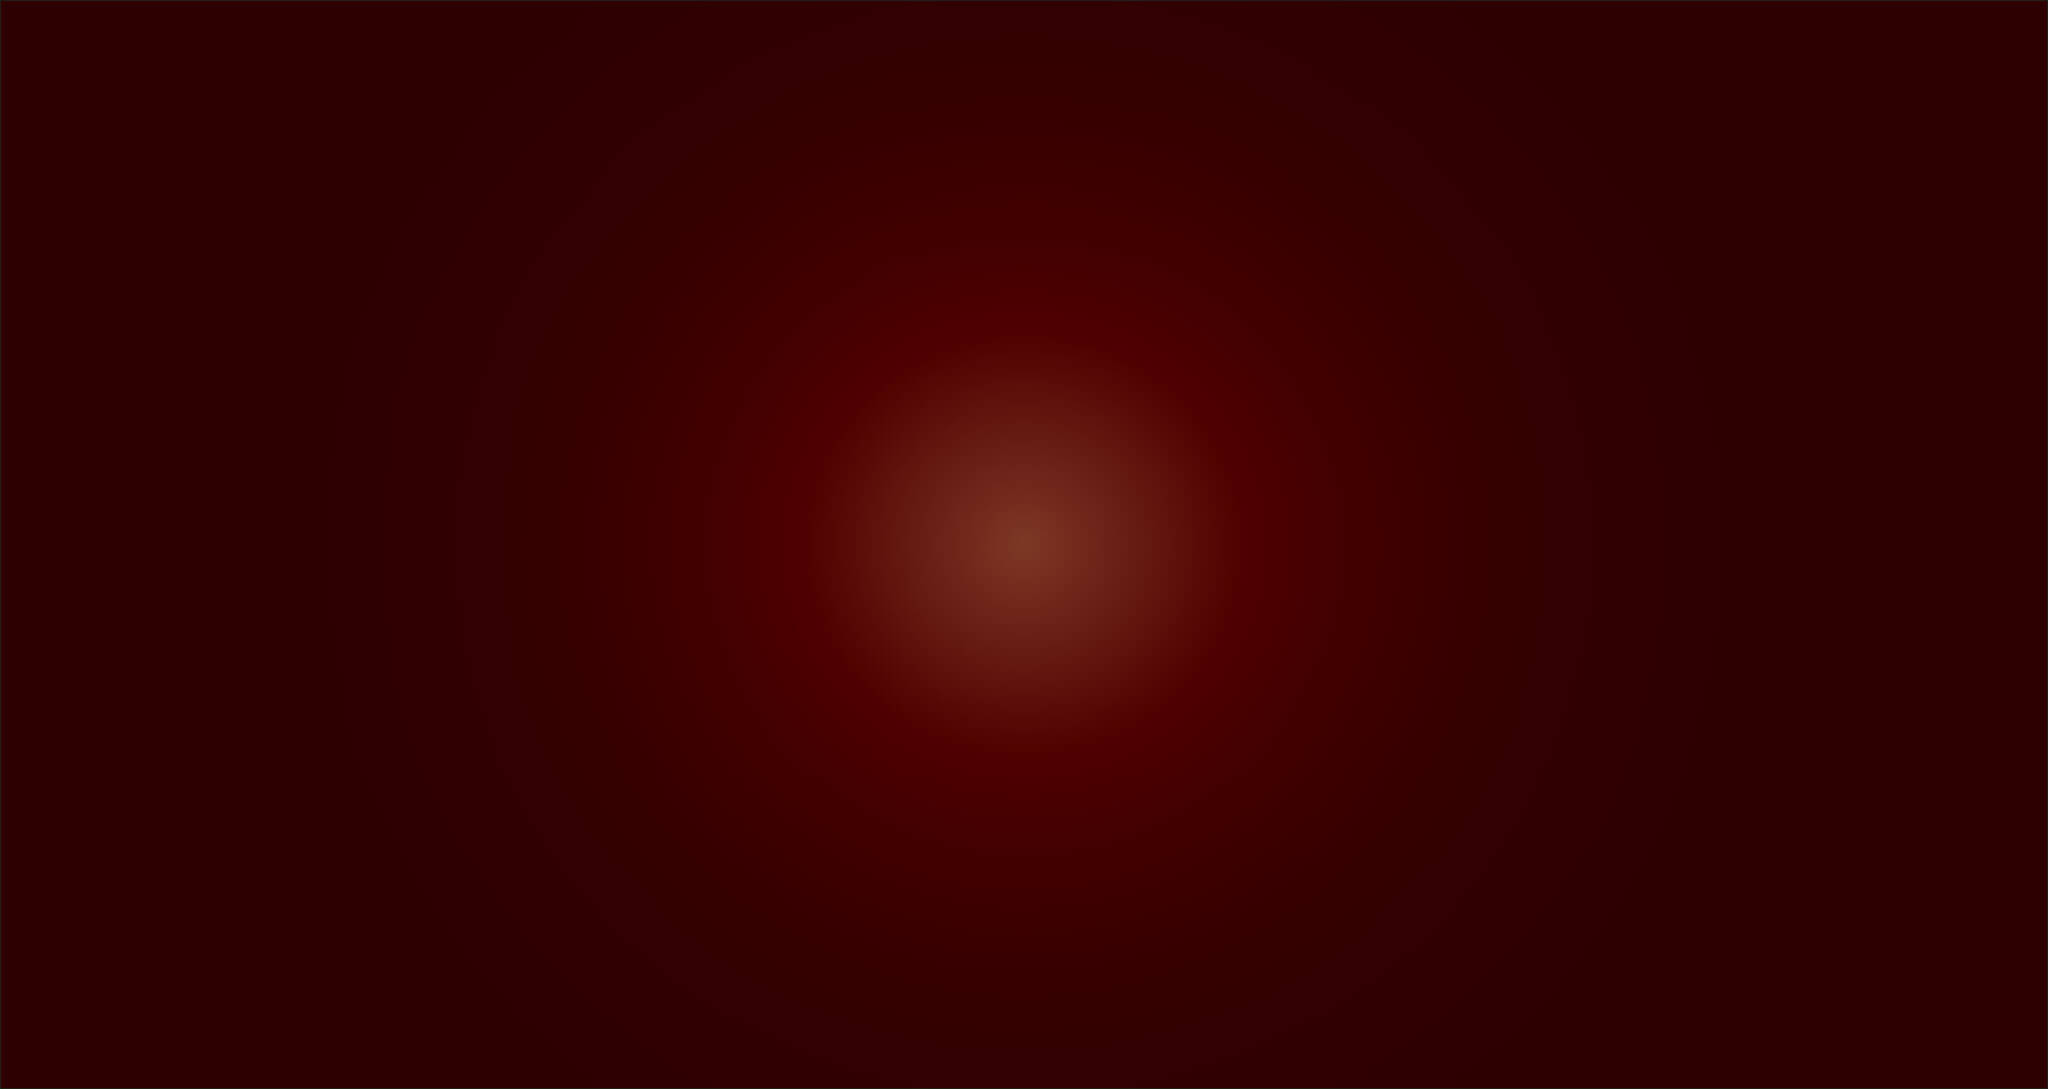 10mfh-background-red.jpg